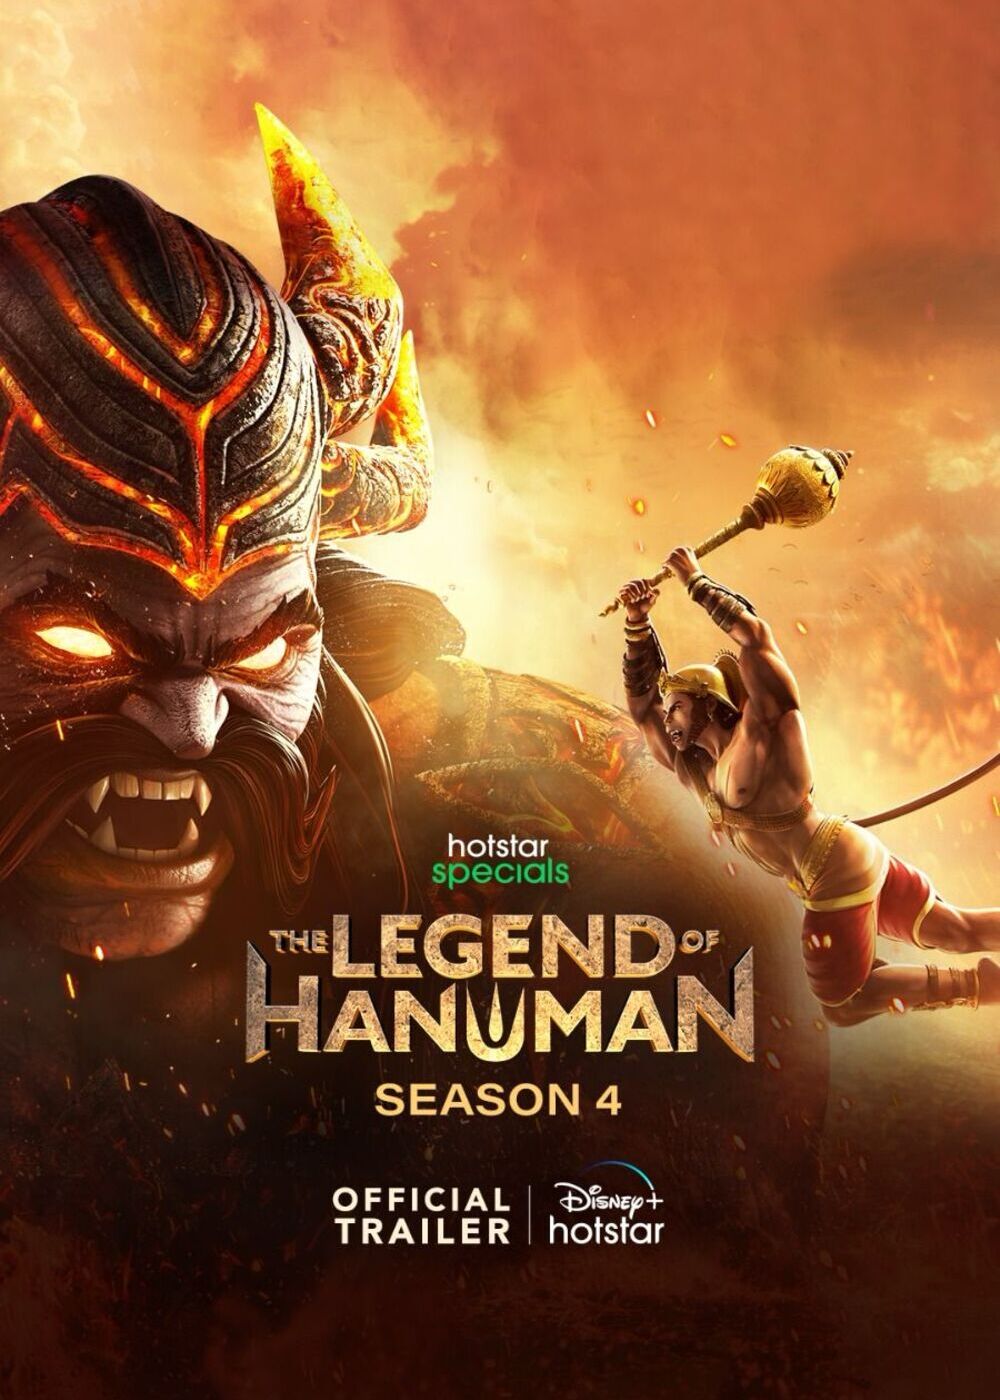 The Legend of Hanuman Season 4